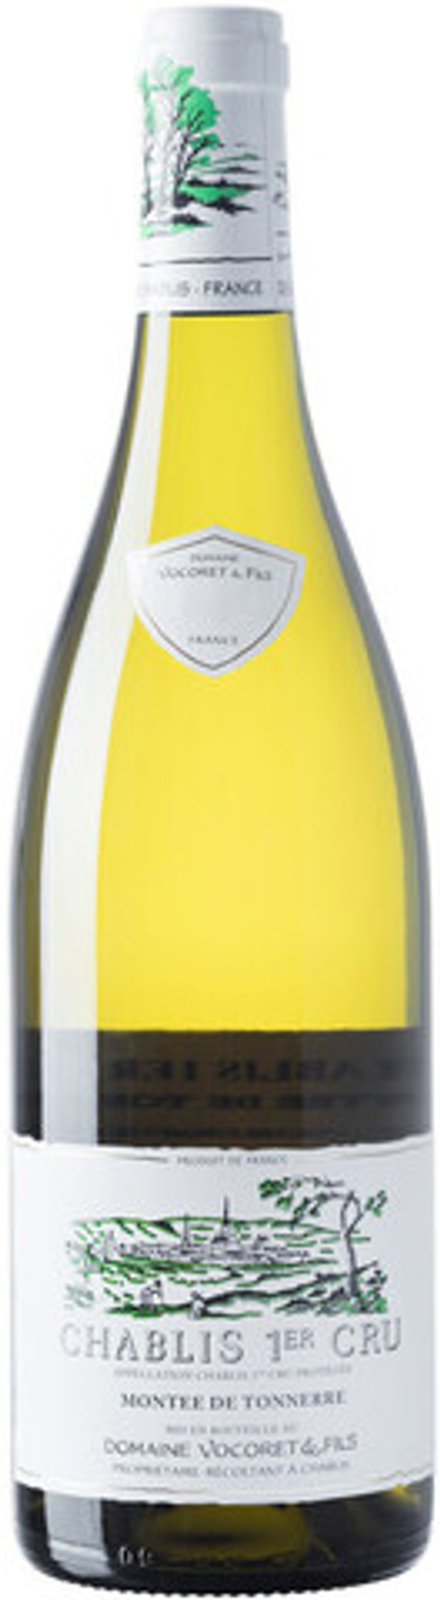 Вино Domaine Vocoret & Fils Chablis 1-er Cru Montee de Tonnerre AOP, 0,75 л.